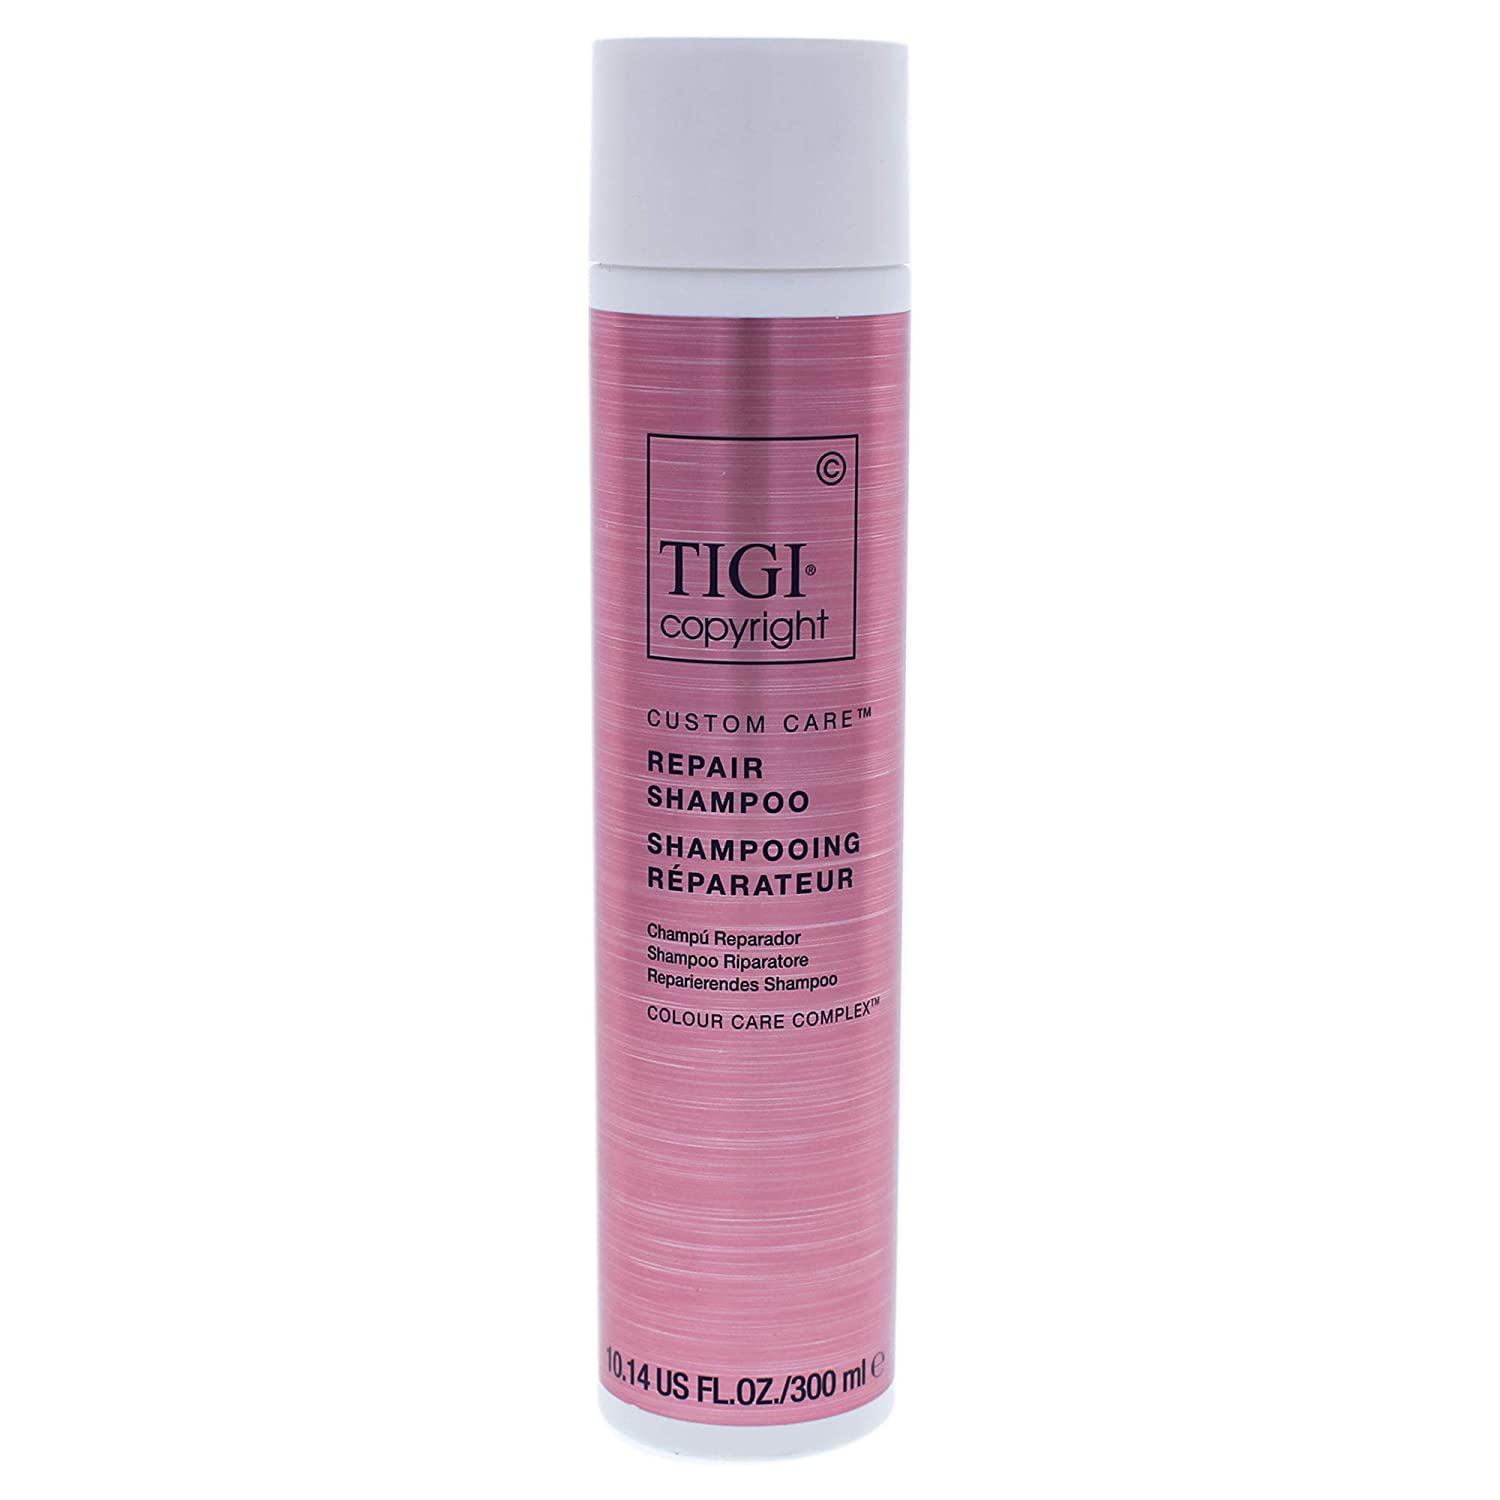 Shampoo For Long Hair: Tigi